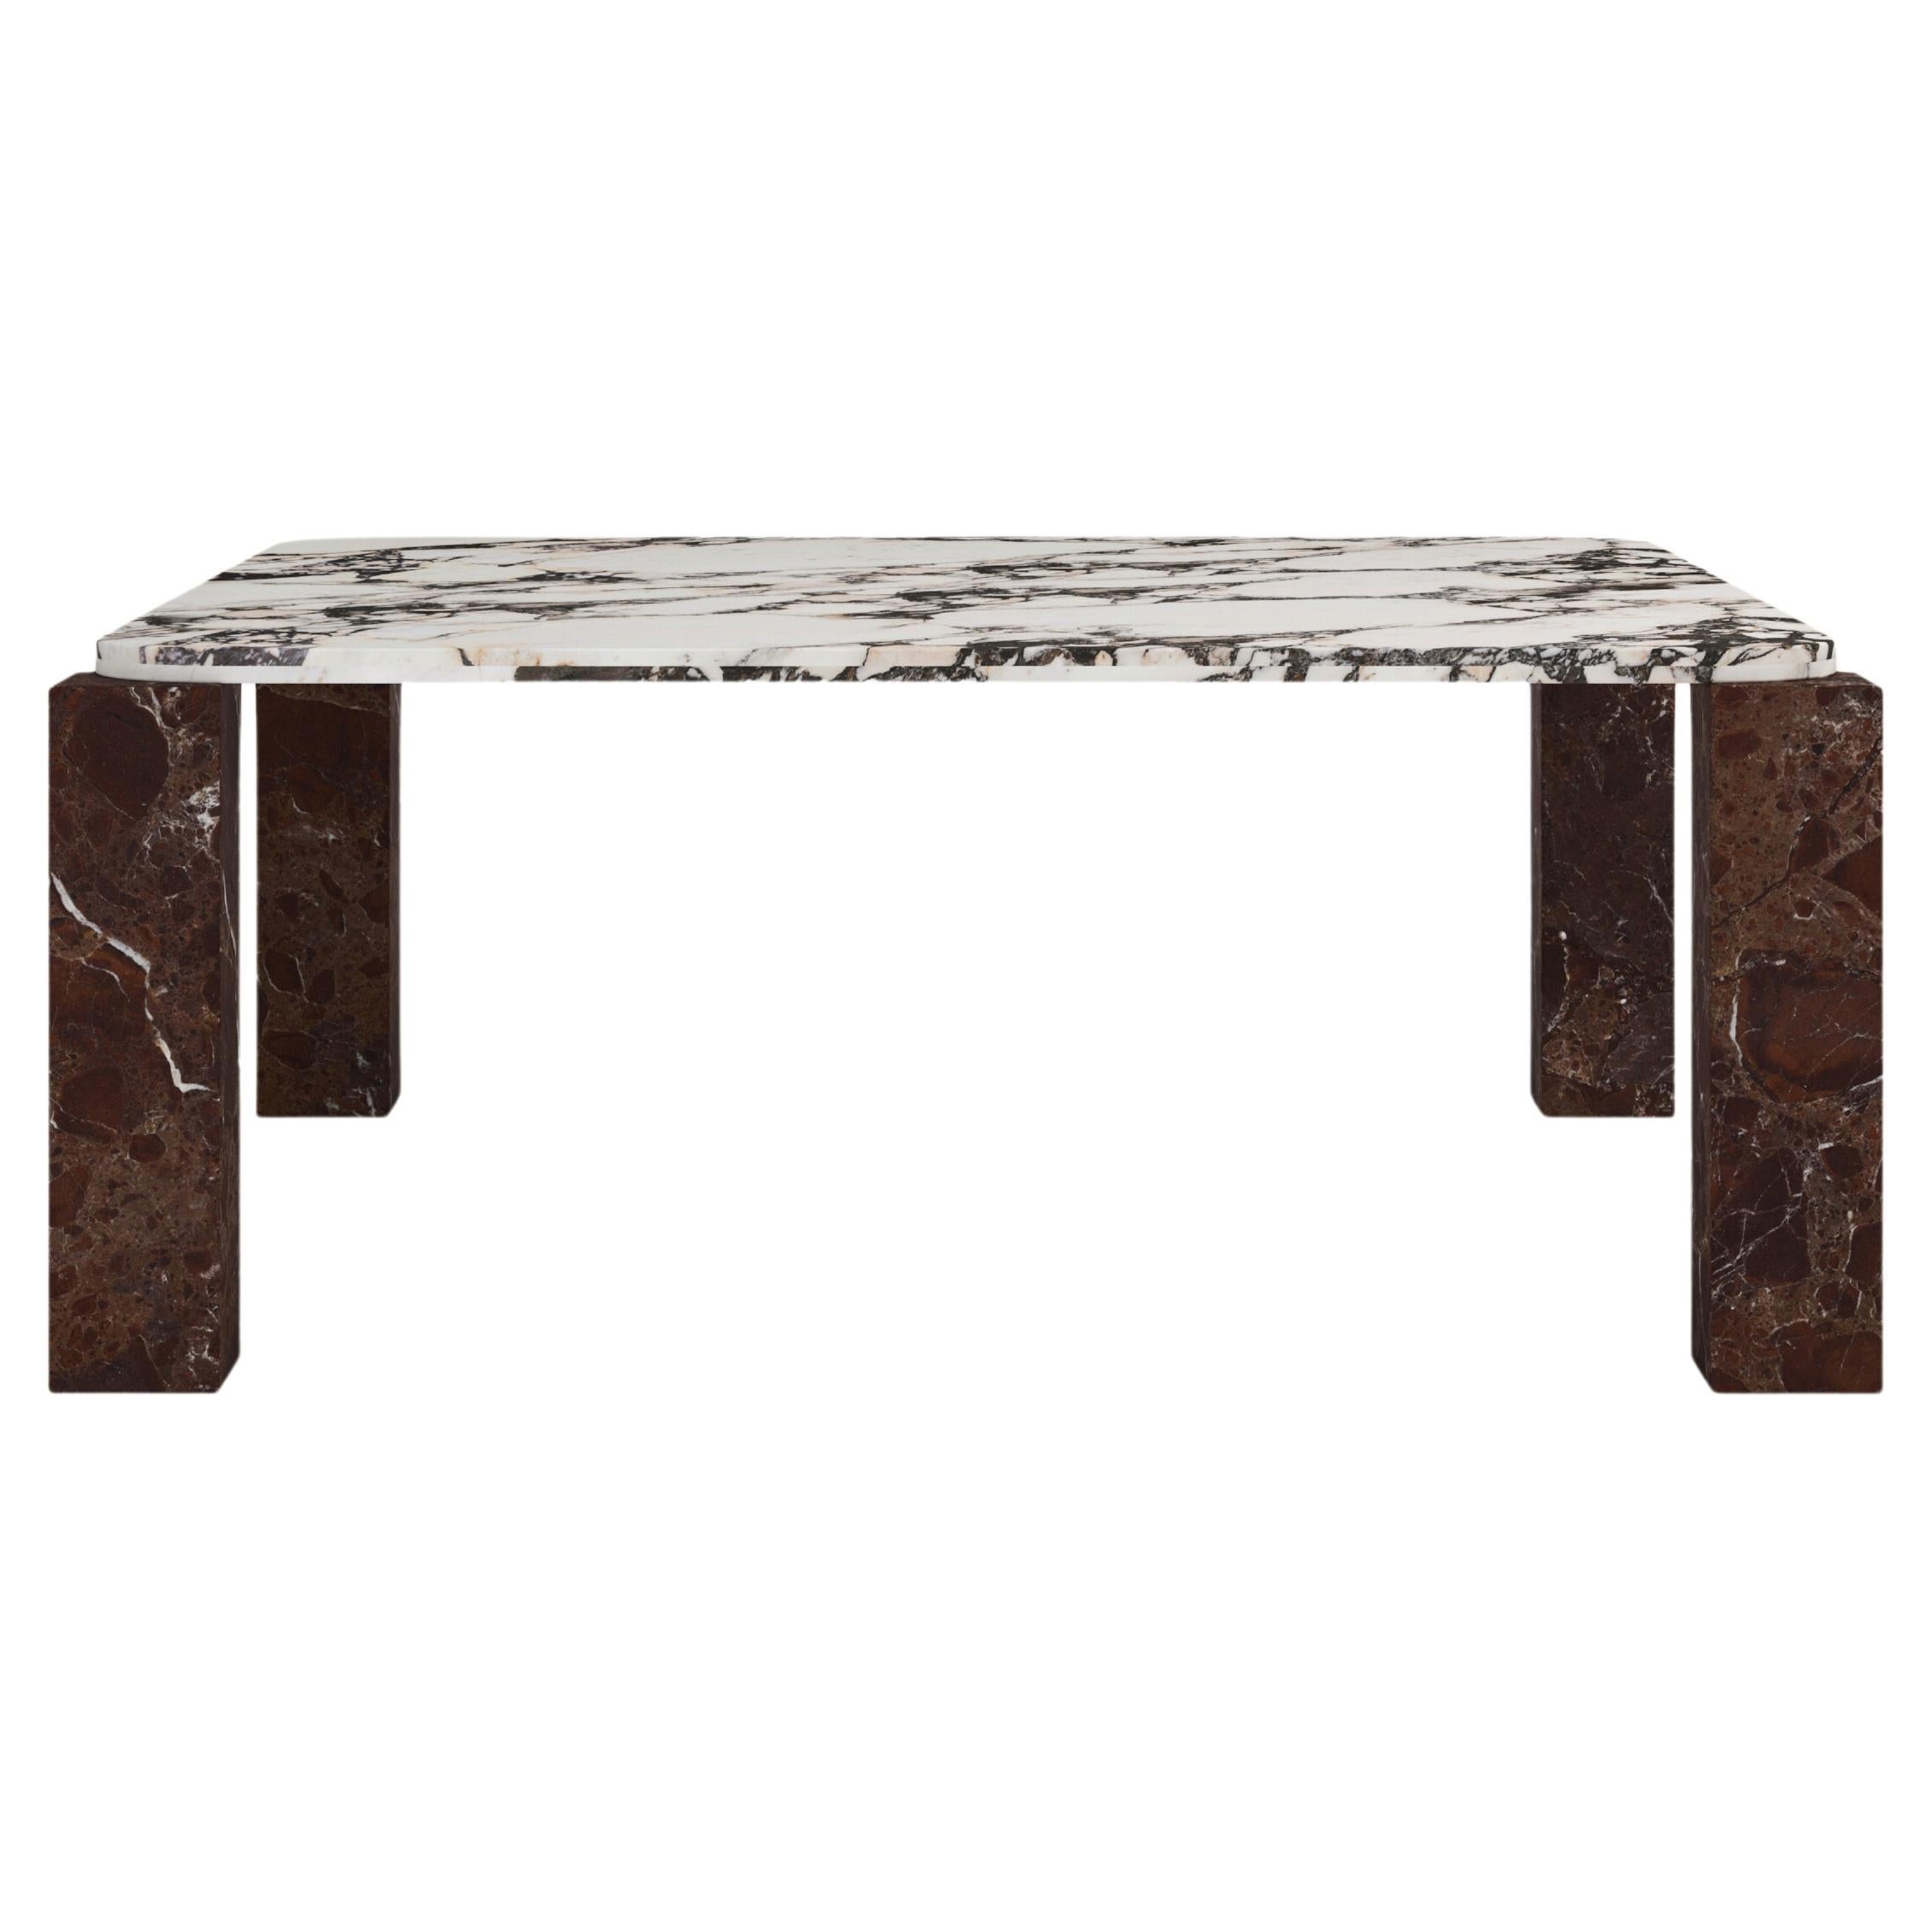 FORM(LA) Cubo Square Dining Table 74”L x 74”W x 30”H Viola & Rosso Marble